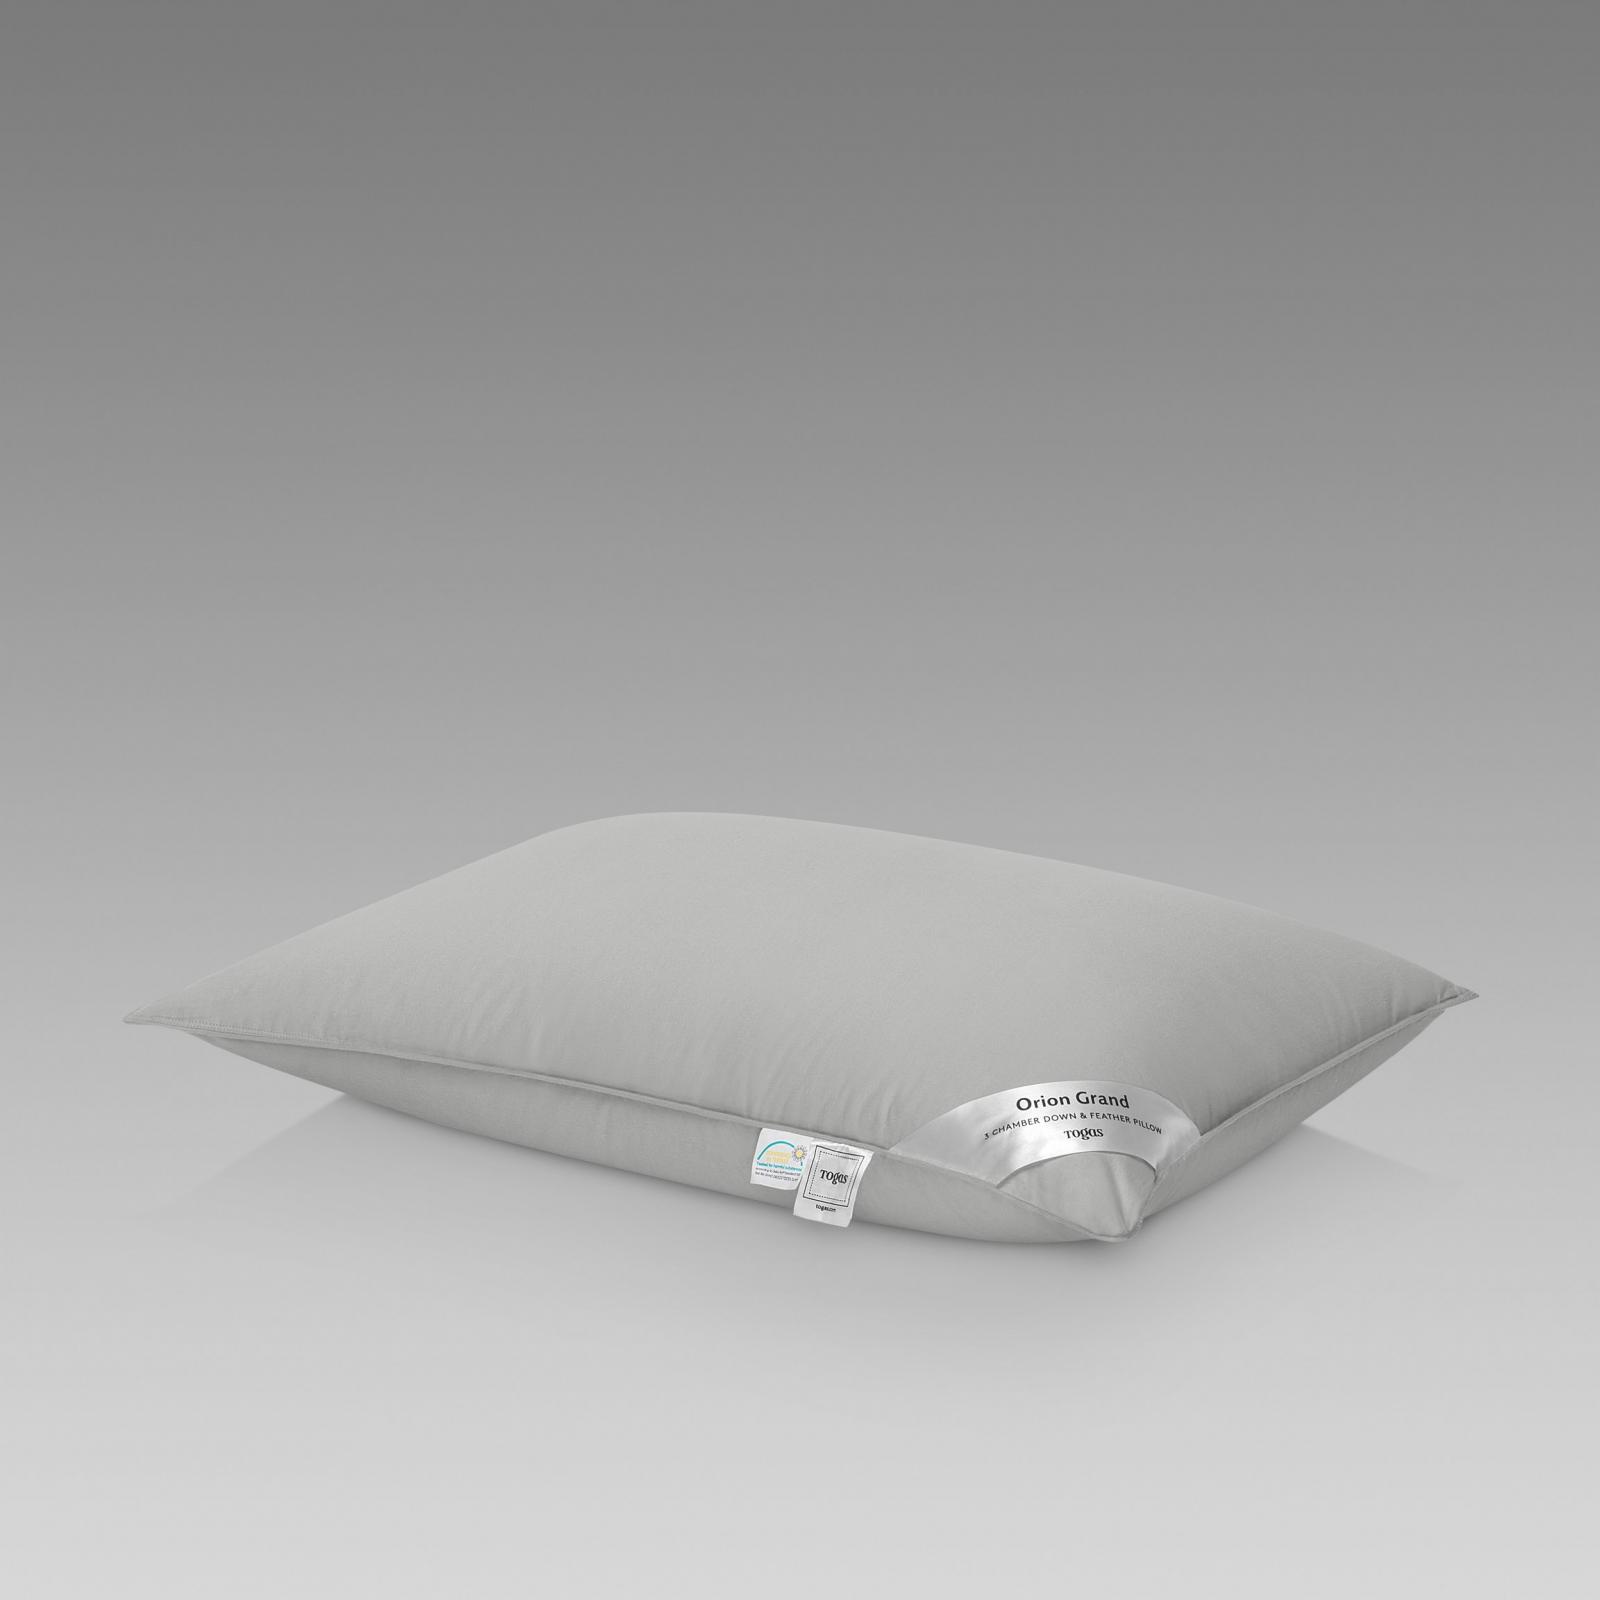 Подушка Togas Орион Гранд серая 50х70 см (20.05.19.0040) подушка togas соверен 50x70 плотная